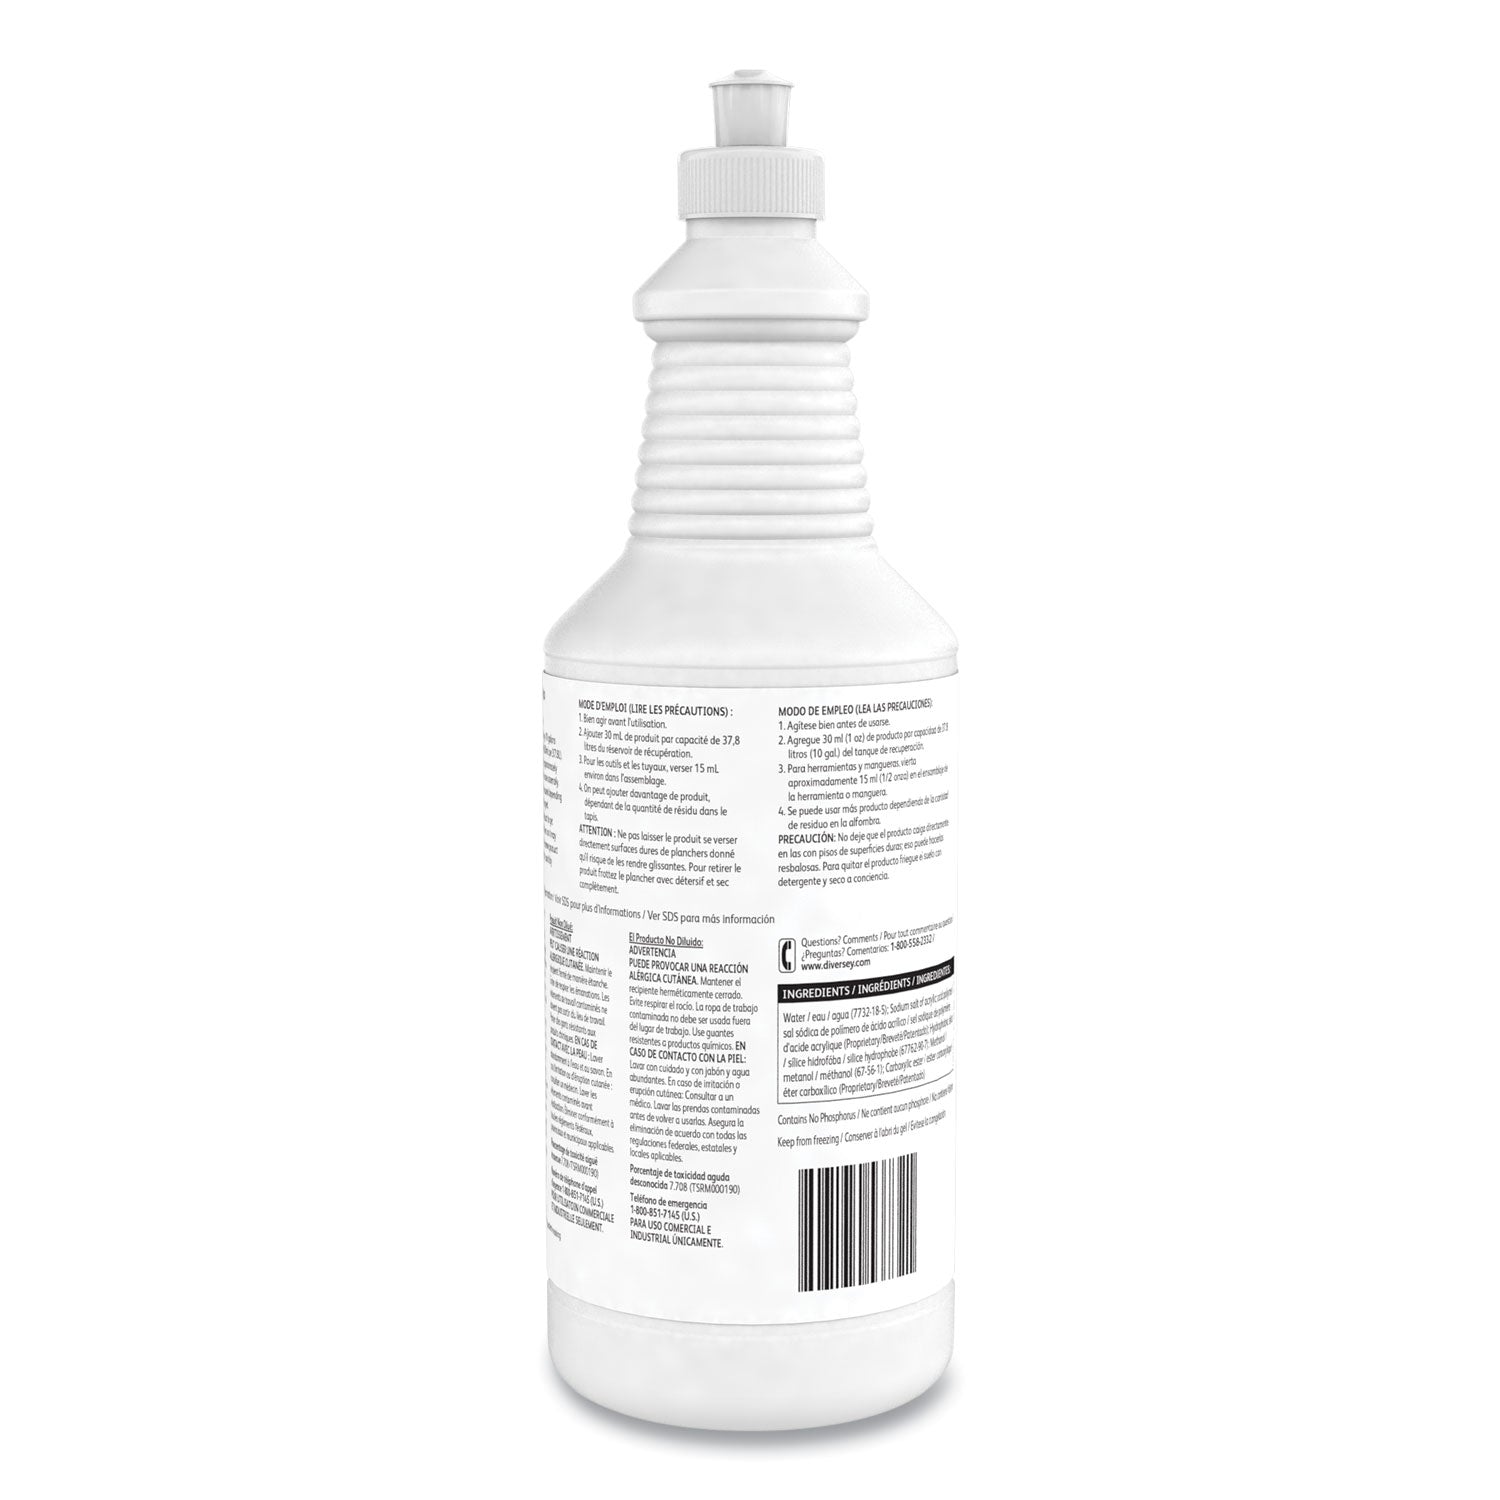 defoamer-carpet-cleaner-cream-bland-scent-32-oz-squeeze-bottle_dvo95002620 - 2